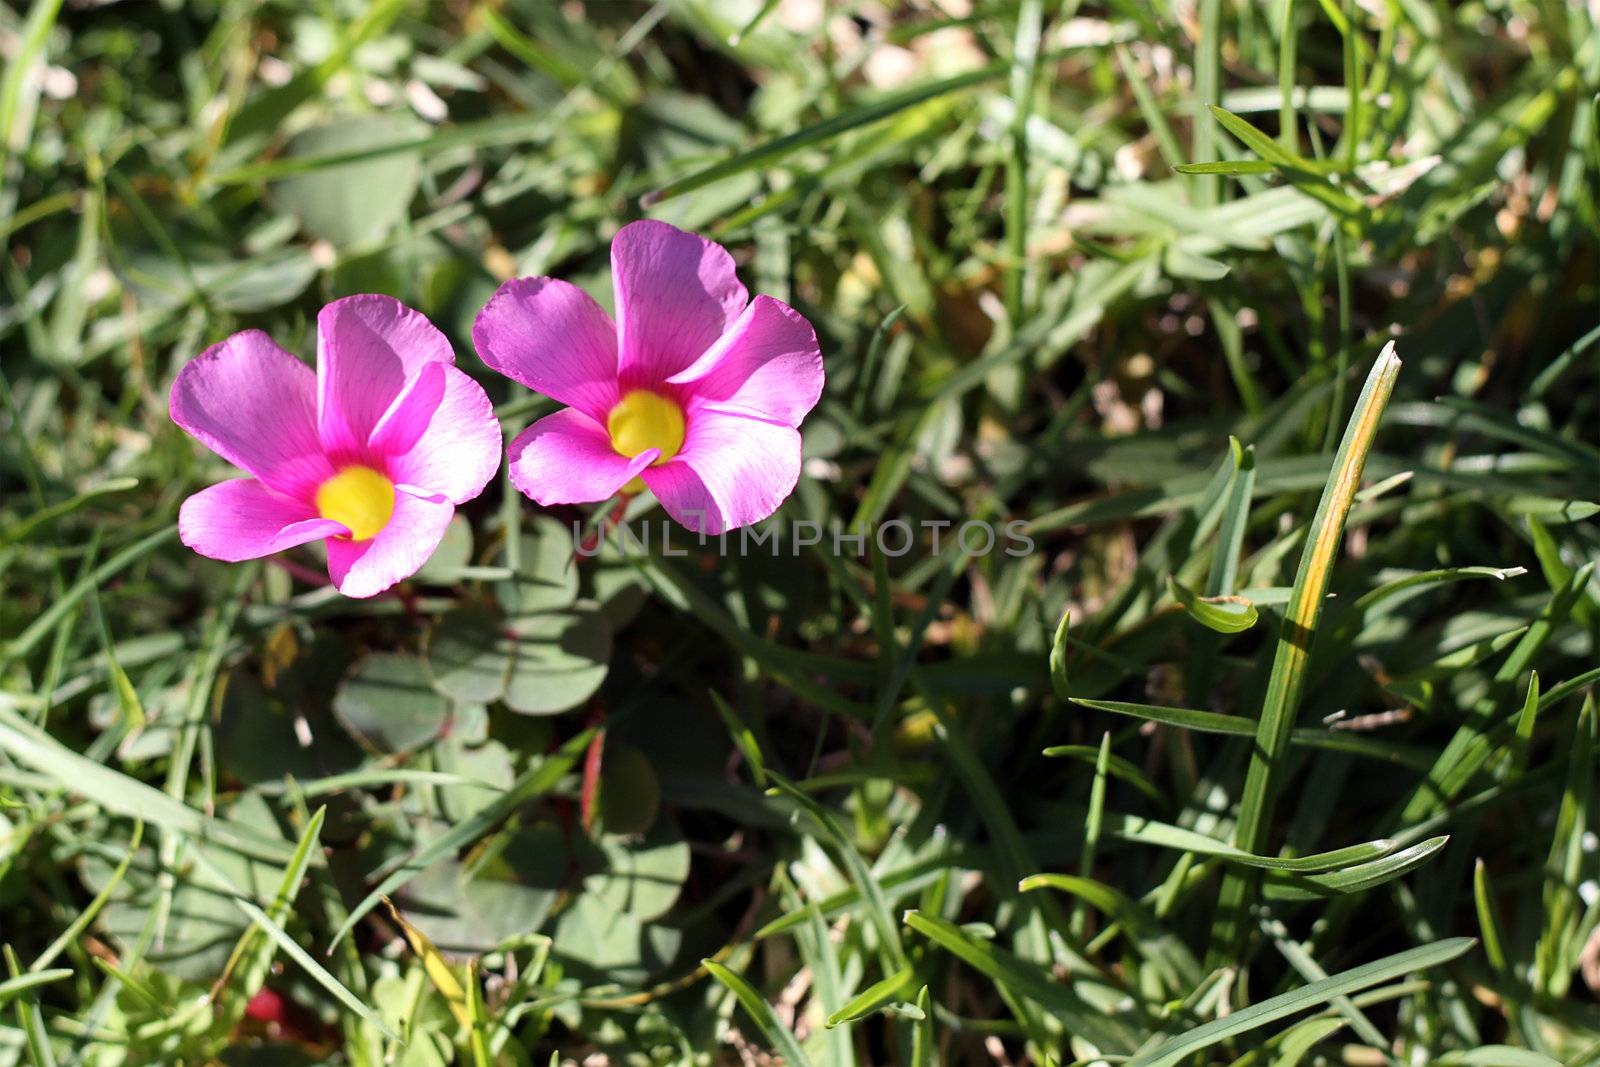 Pink oxalis (Oxalis corymbosa) growing in grass lawn